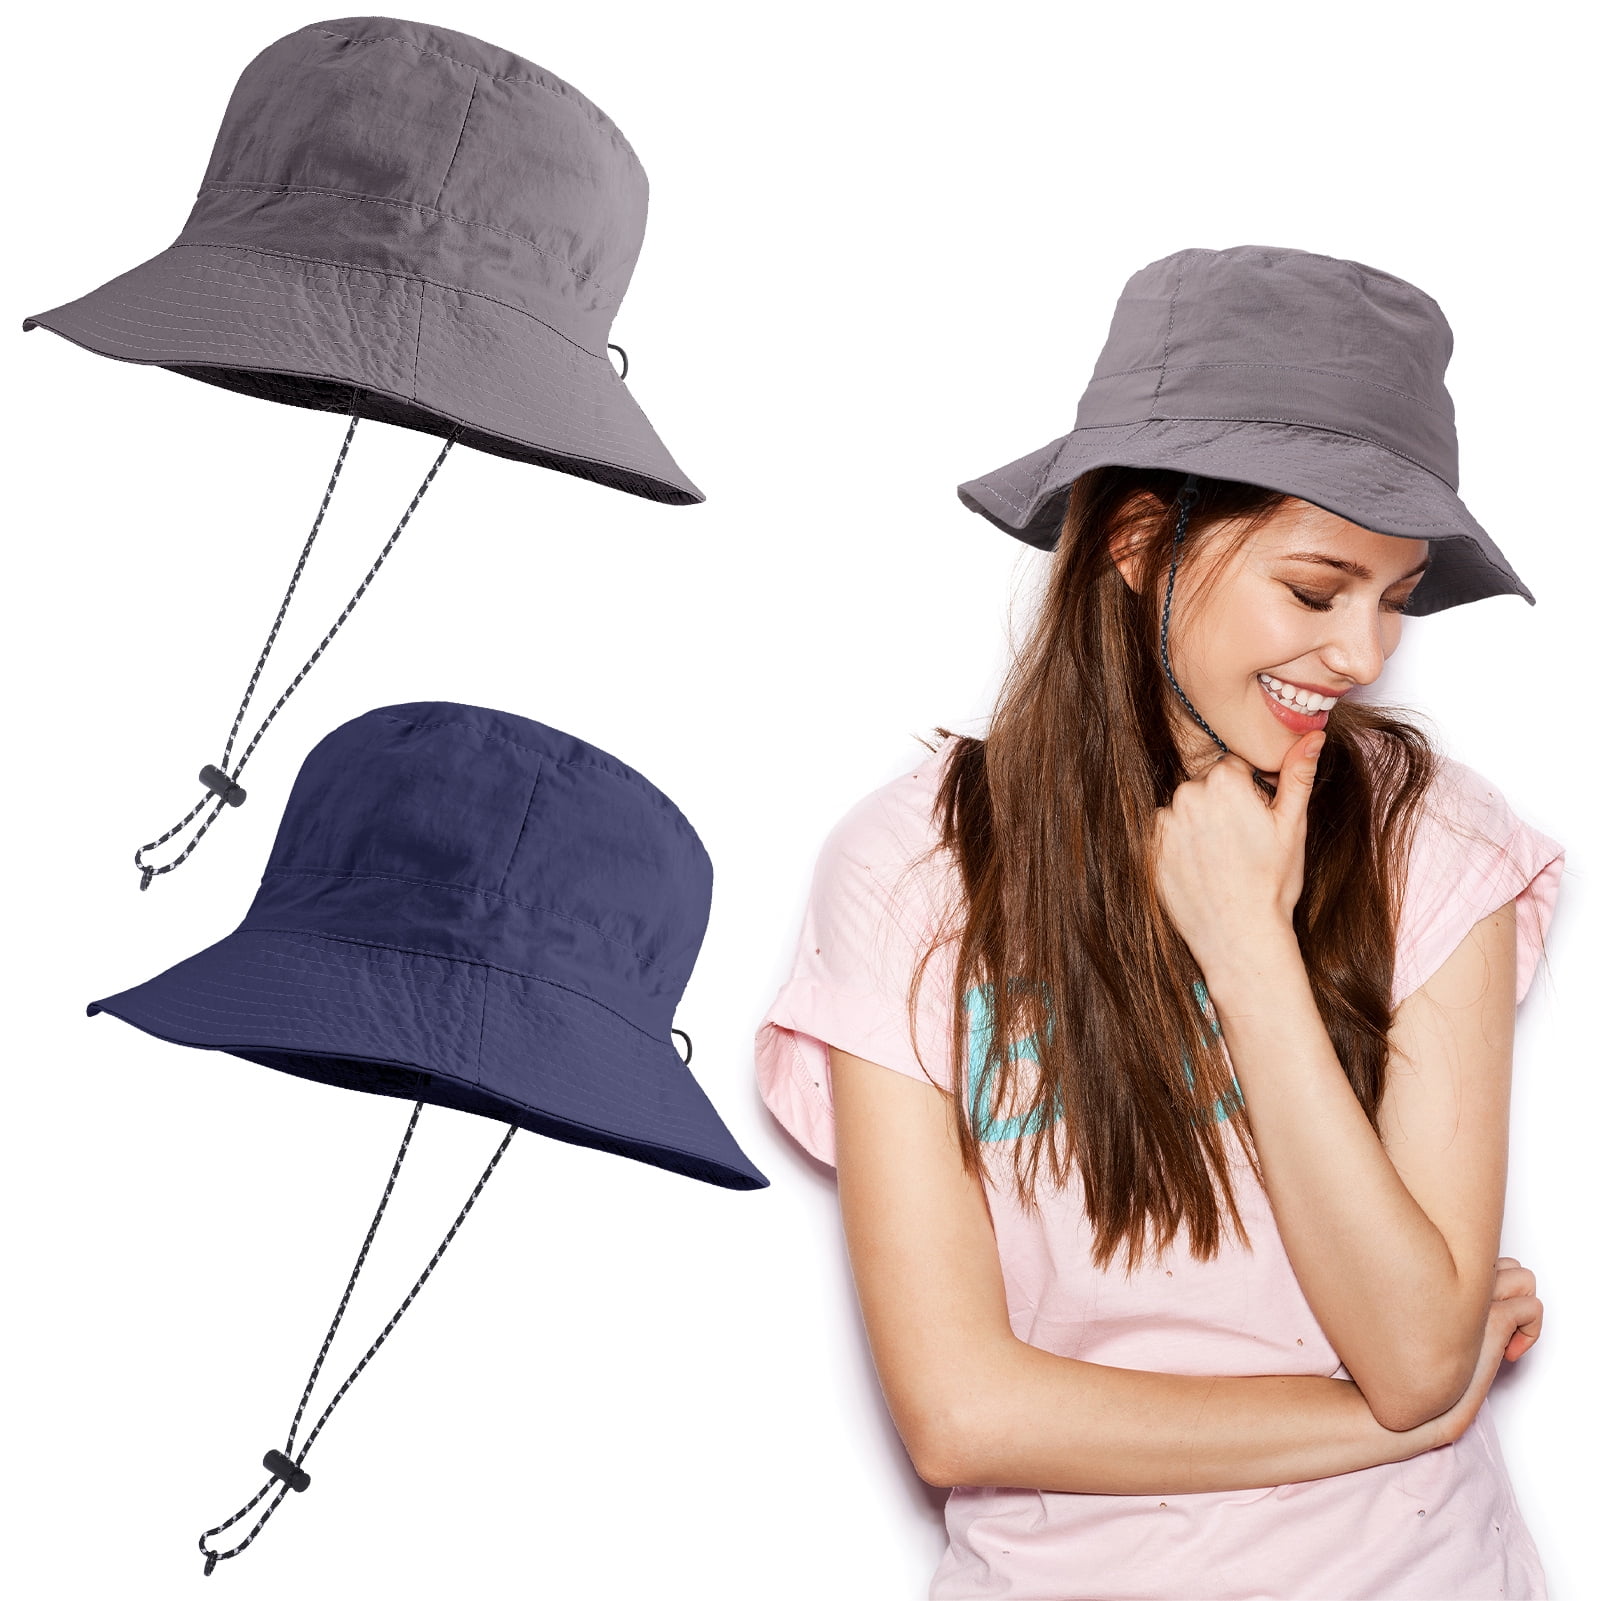 Alien pattern Bucket Hat Unisex Foldable embroidery Cap Hip Hop Gorros 2019  Men Summer Caps Women Panama Fishing Bucket Hat black Bucket Hat